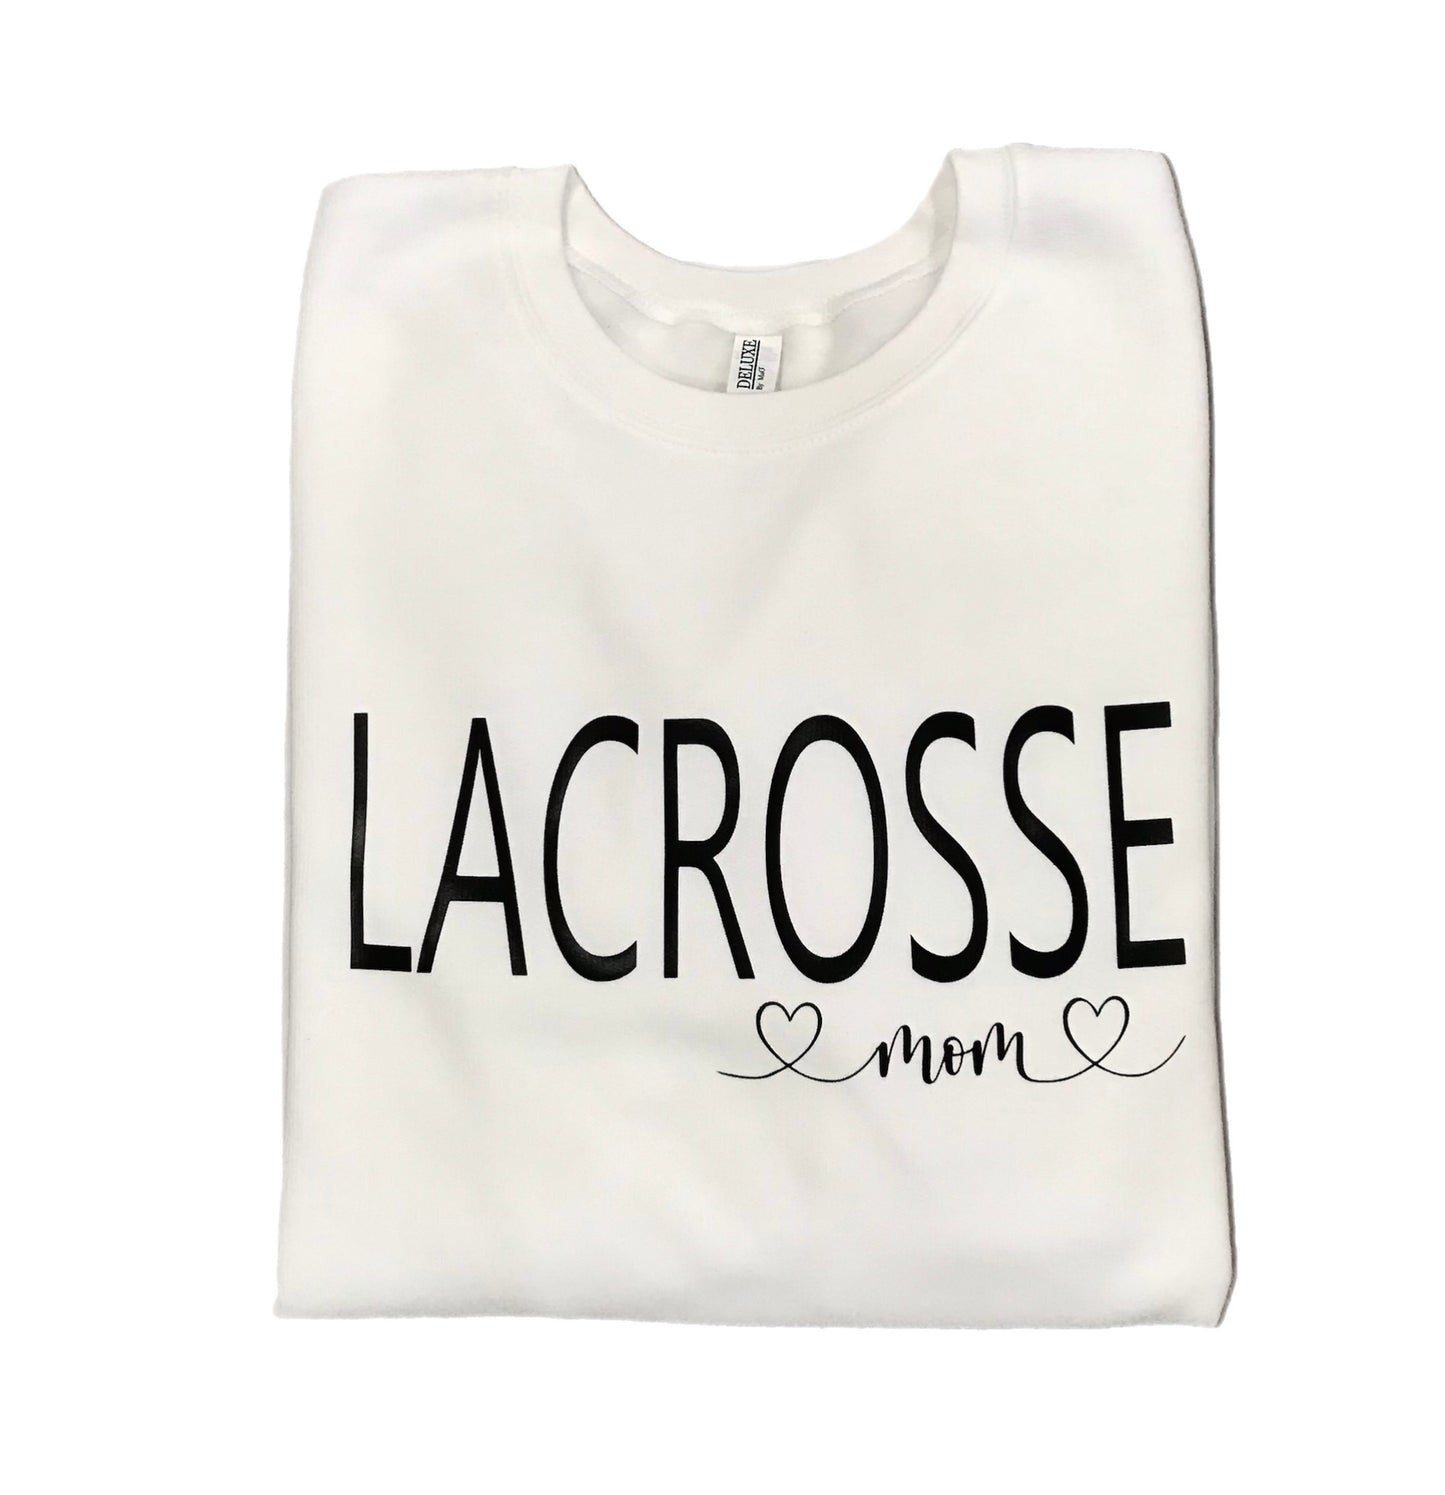 Lacrosse mom sweatshirts